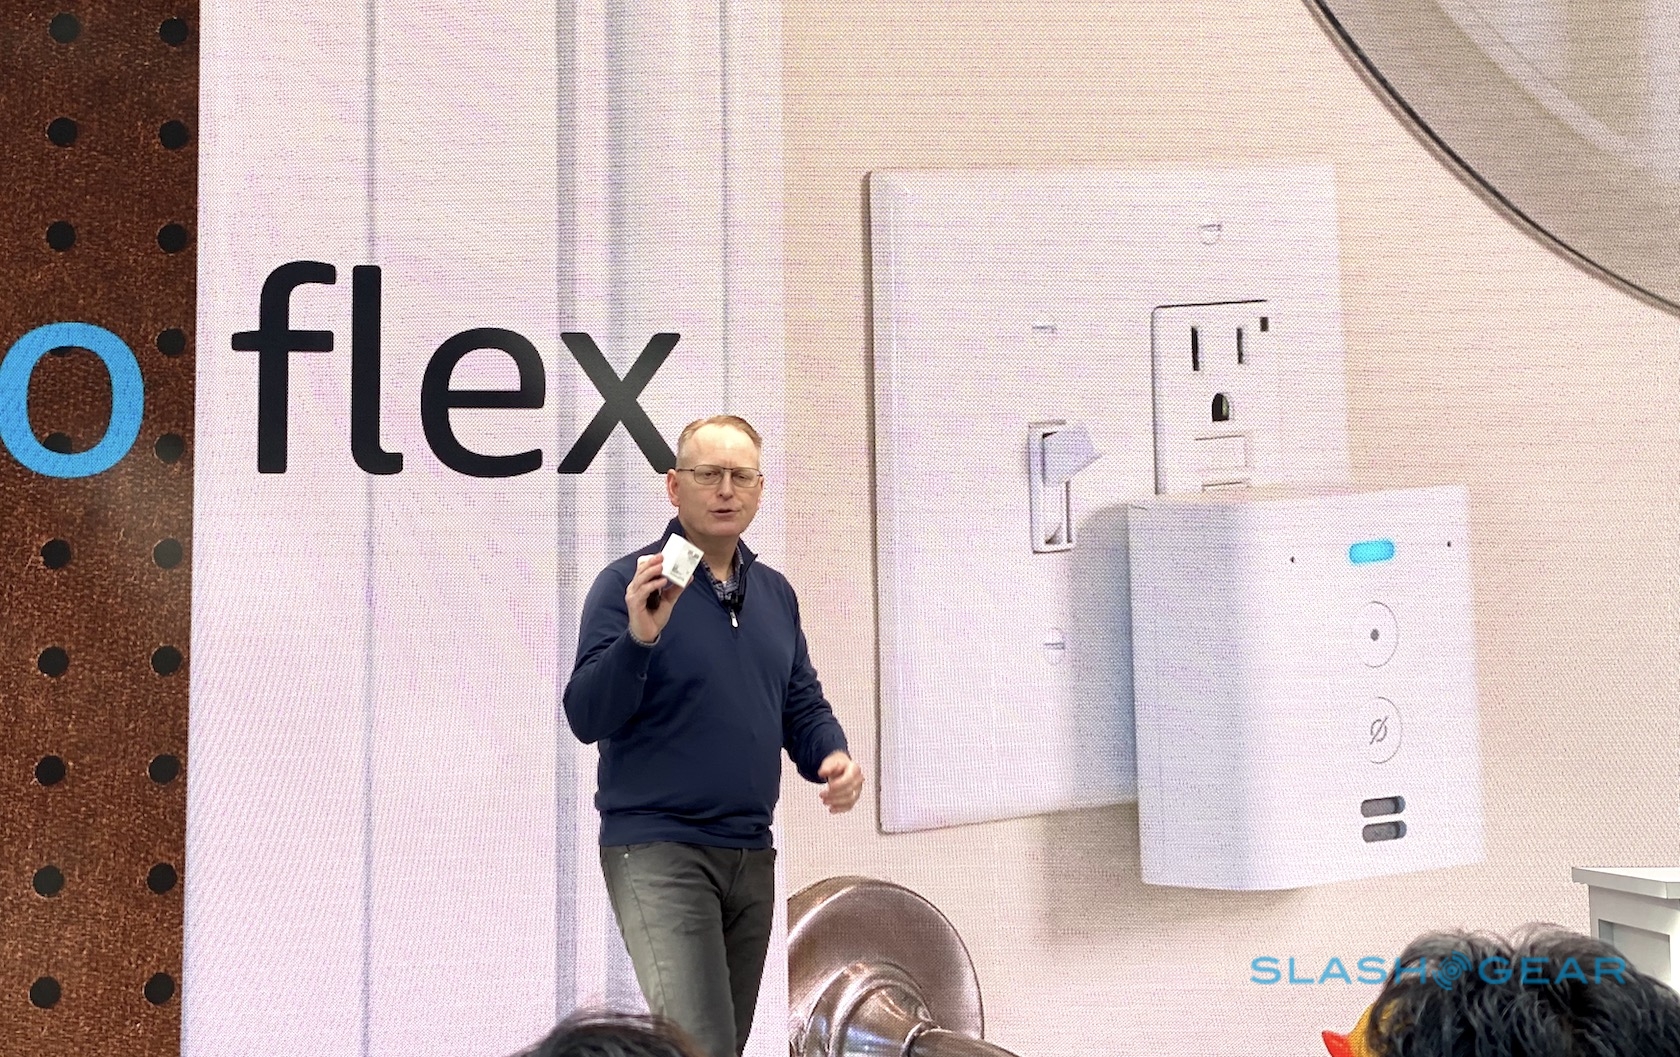 Echo Flex Plugs Alexa Right Into An Outlet With Modular Accessories Slashgear